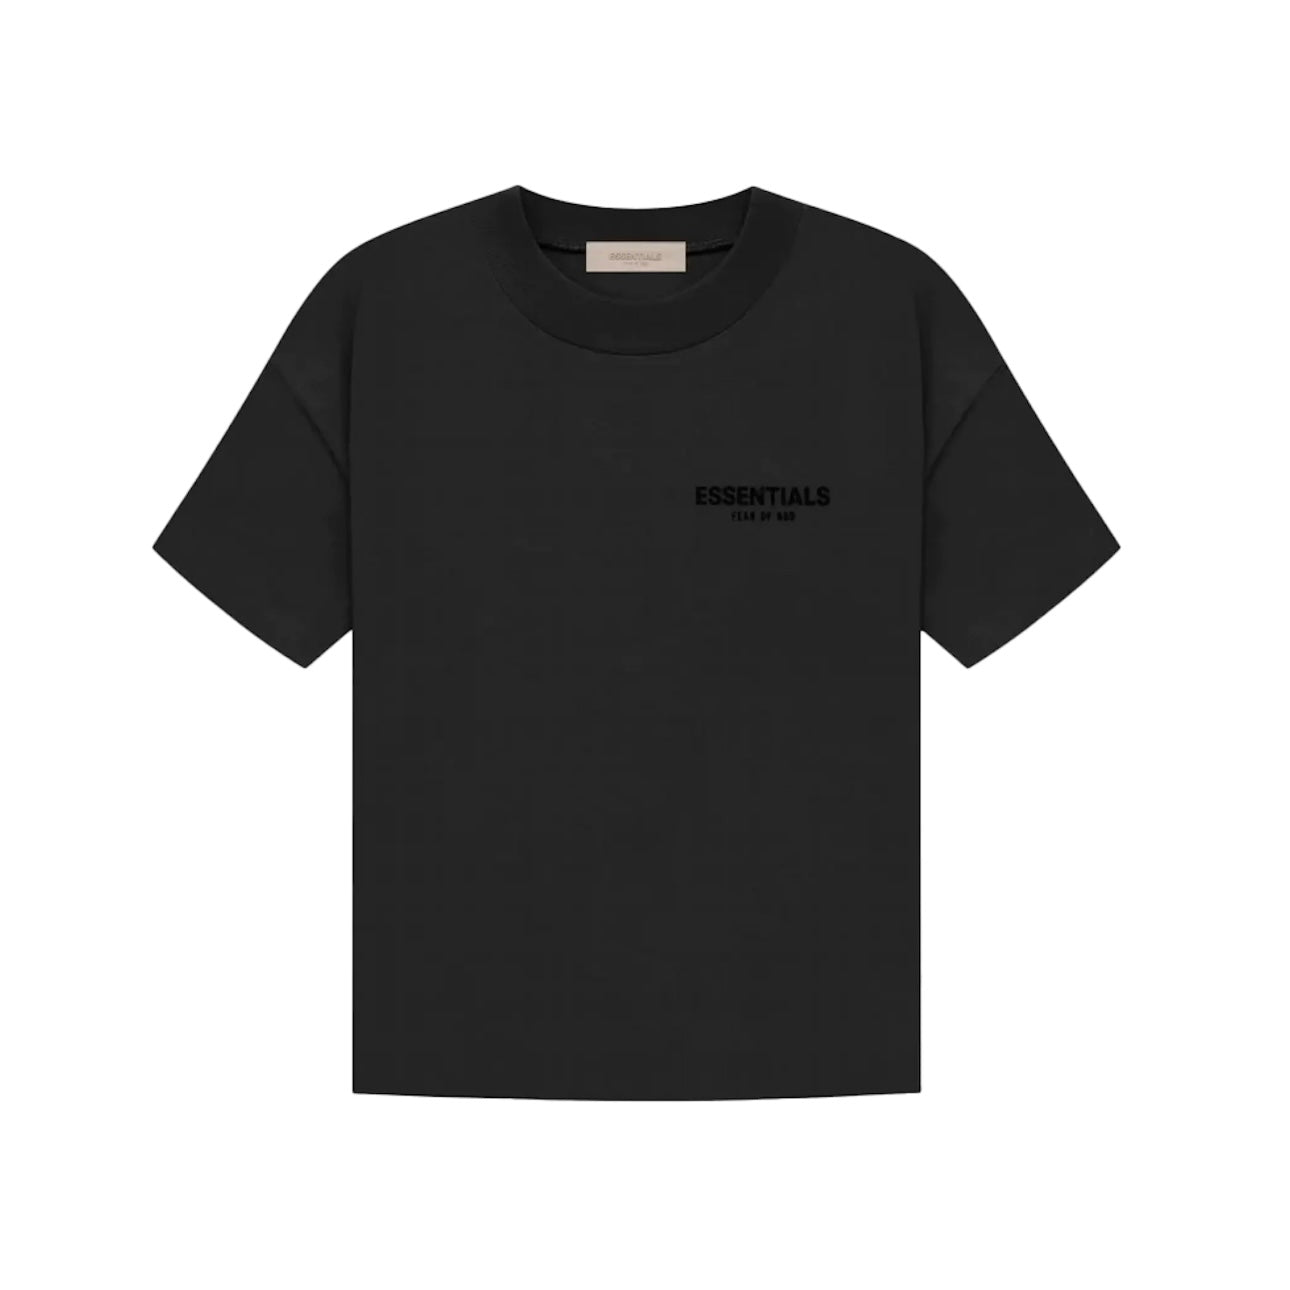 FEAR OF GOD Essentials T-Shirt ‘Black’